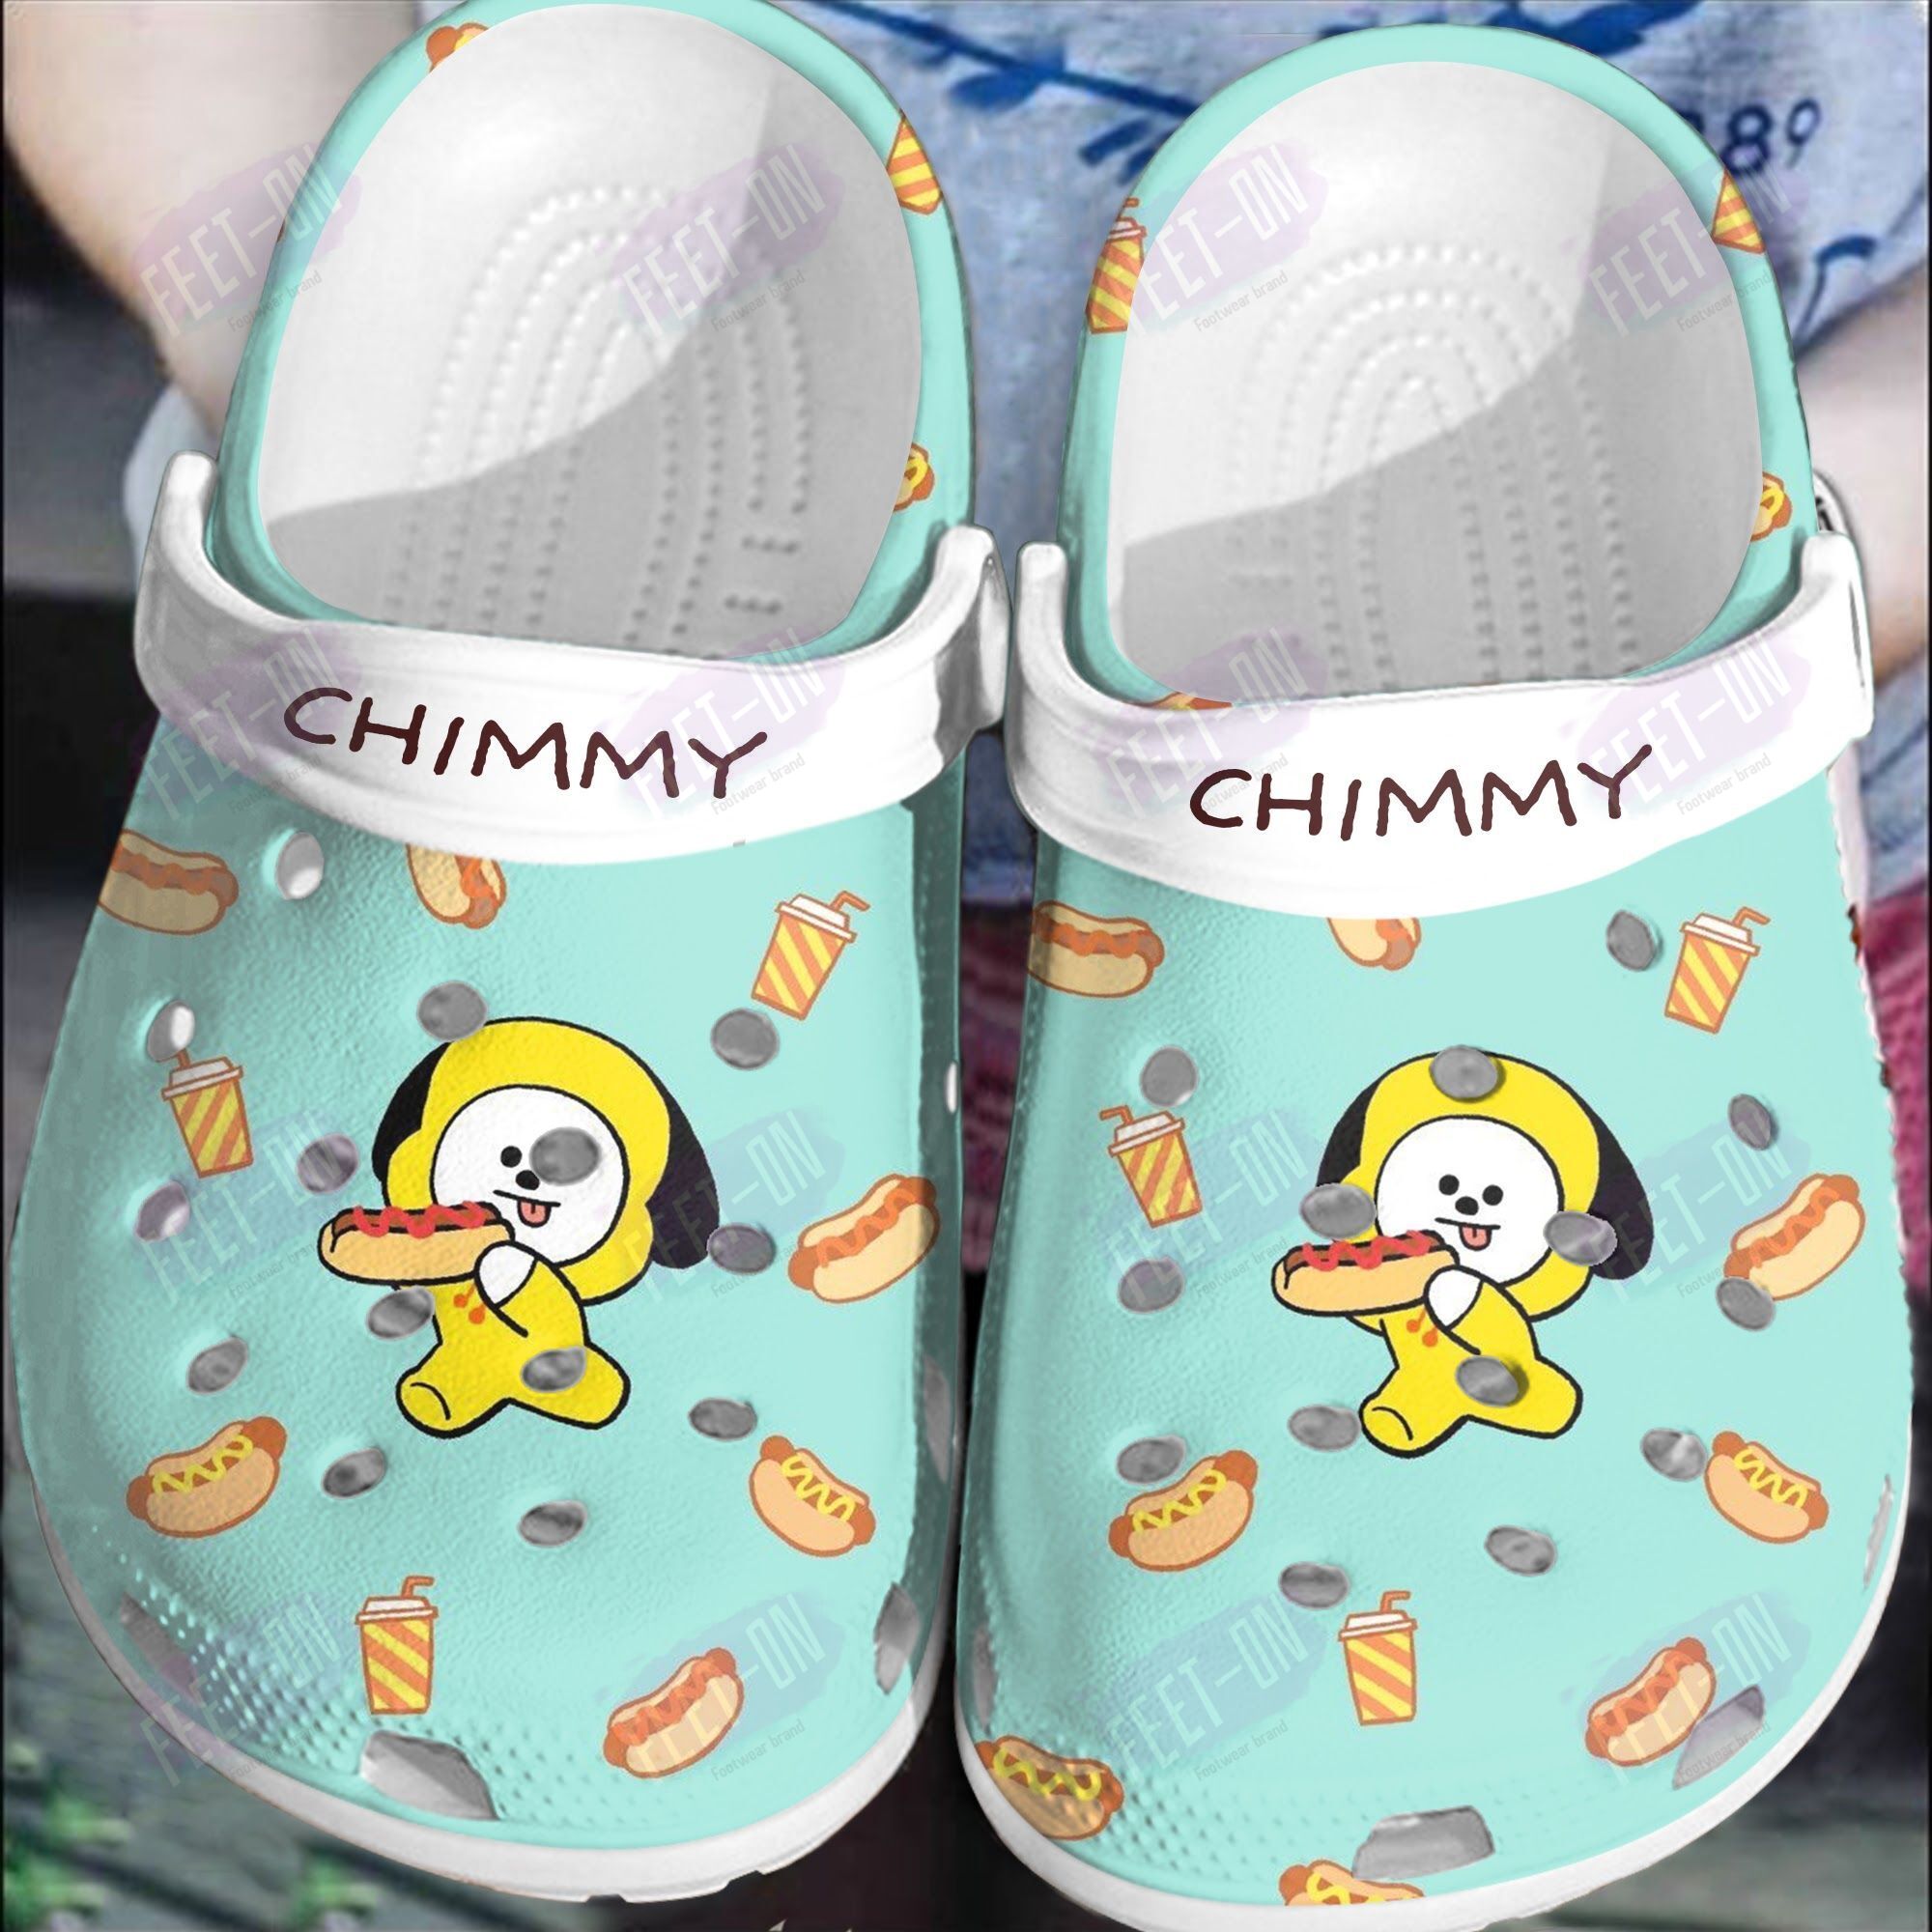 BEST Chimmy BT21 BTS hotdog crocs crocband Shoes